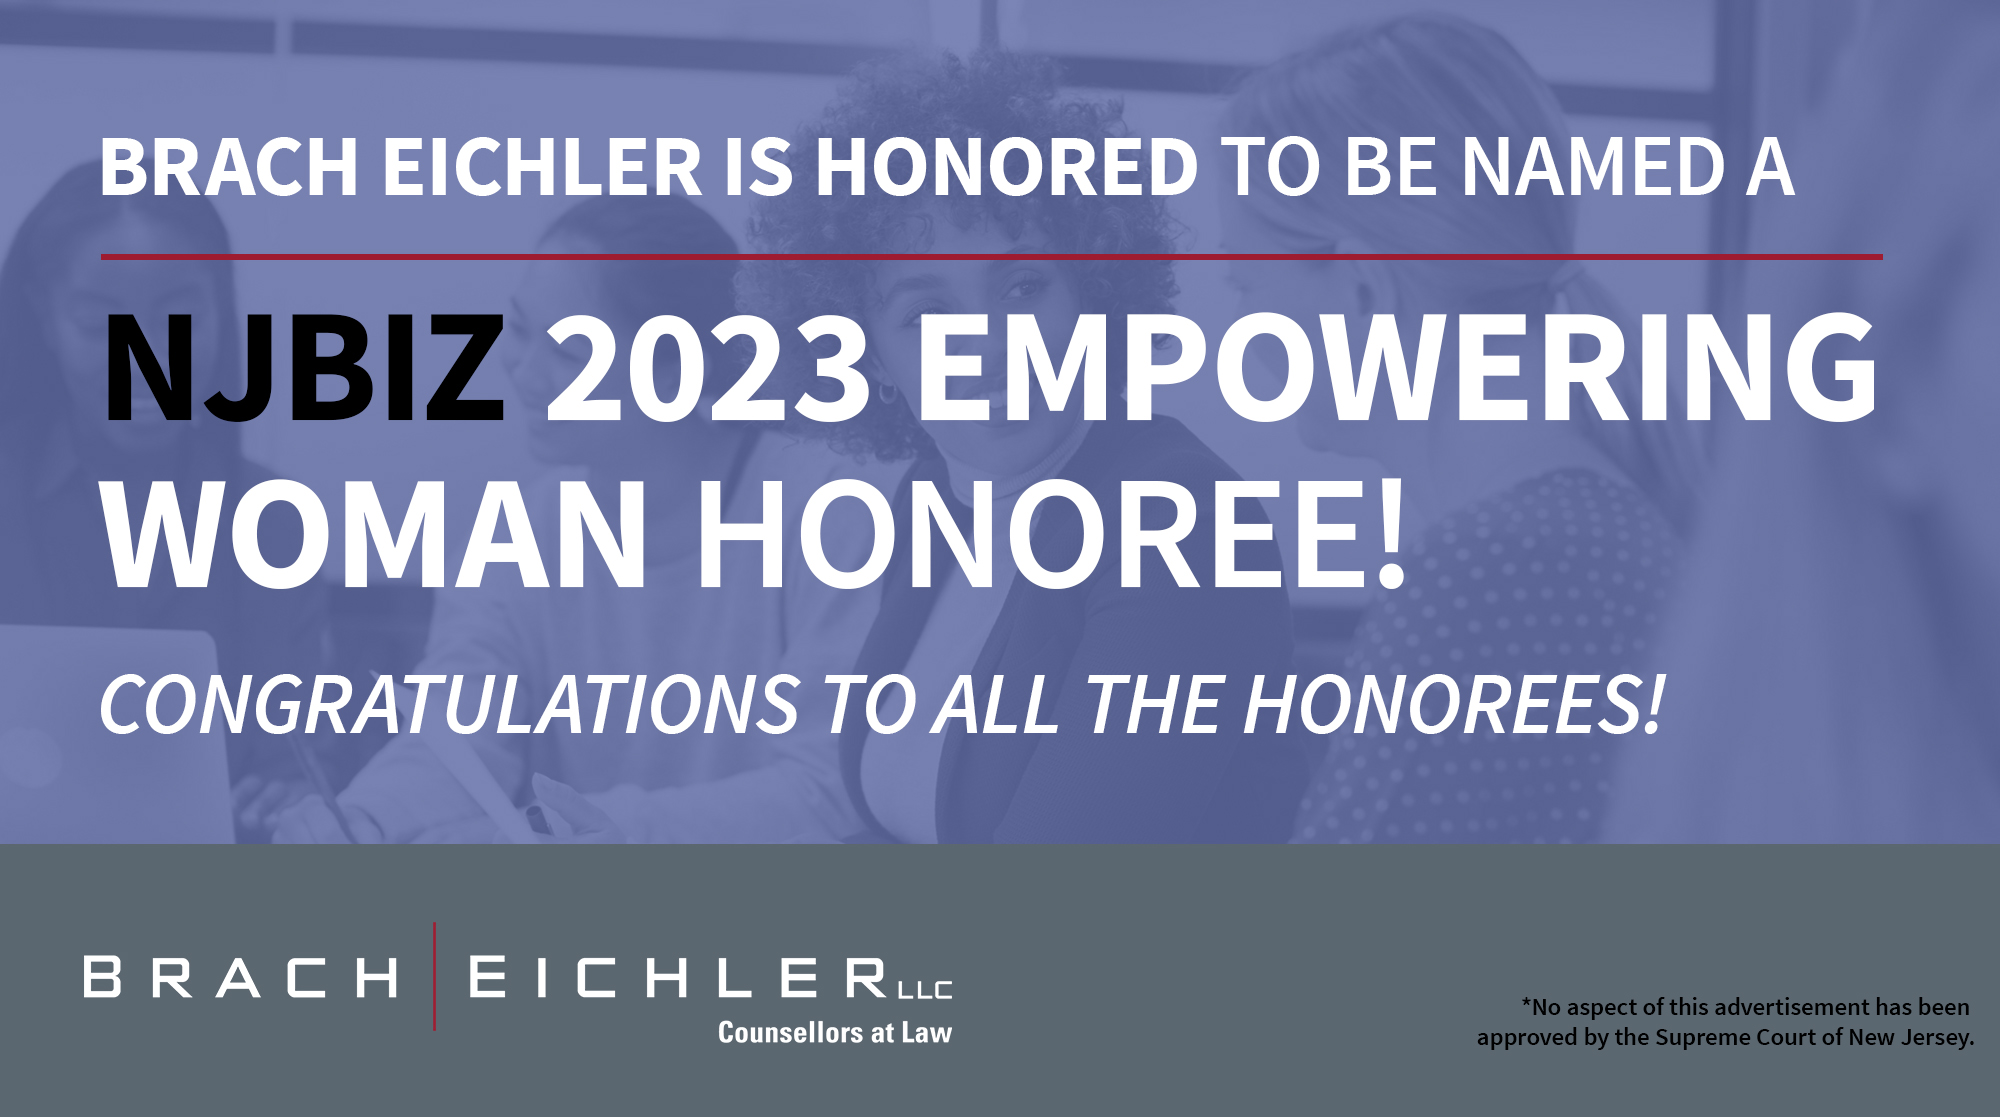 Brach Eichler is an NJBIZ 2023 Empowering Woman Honoree!